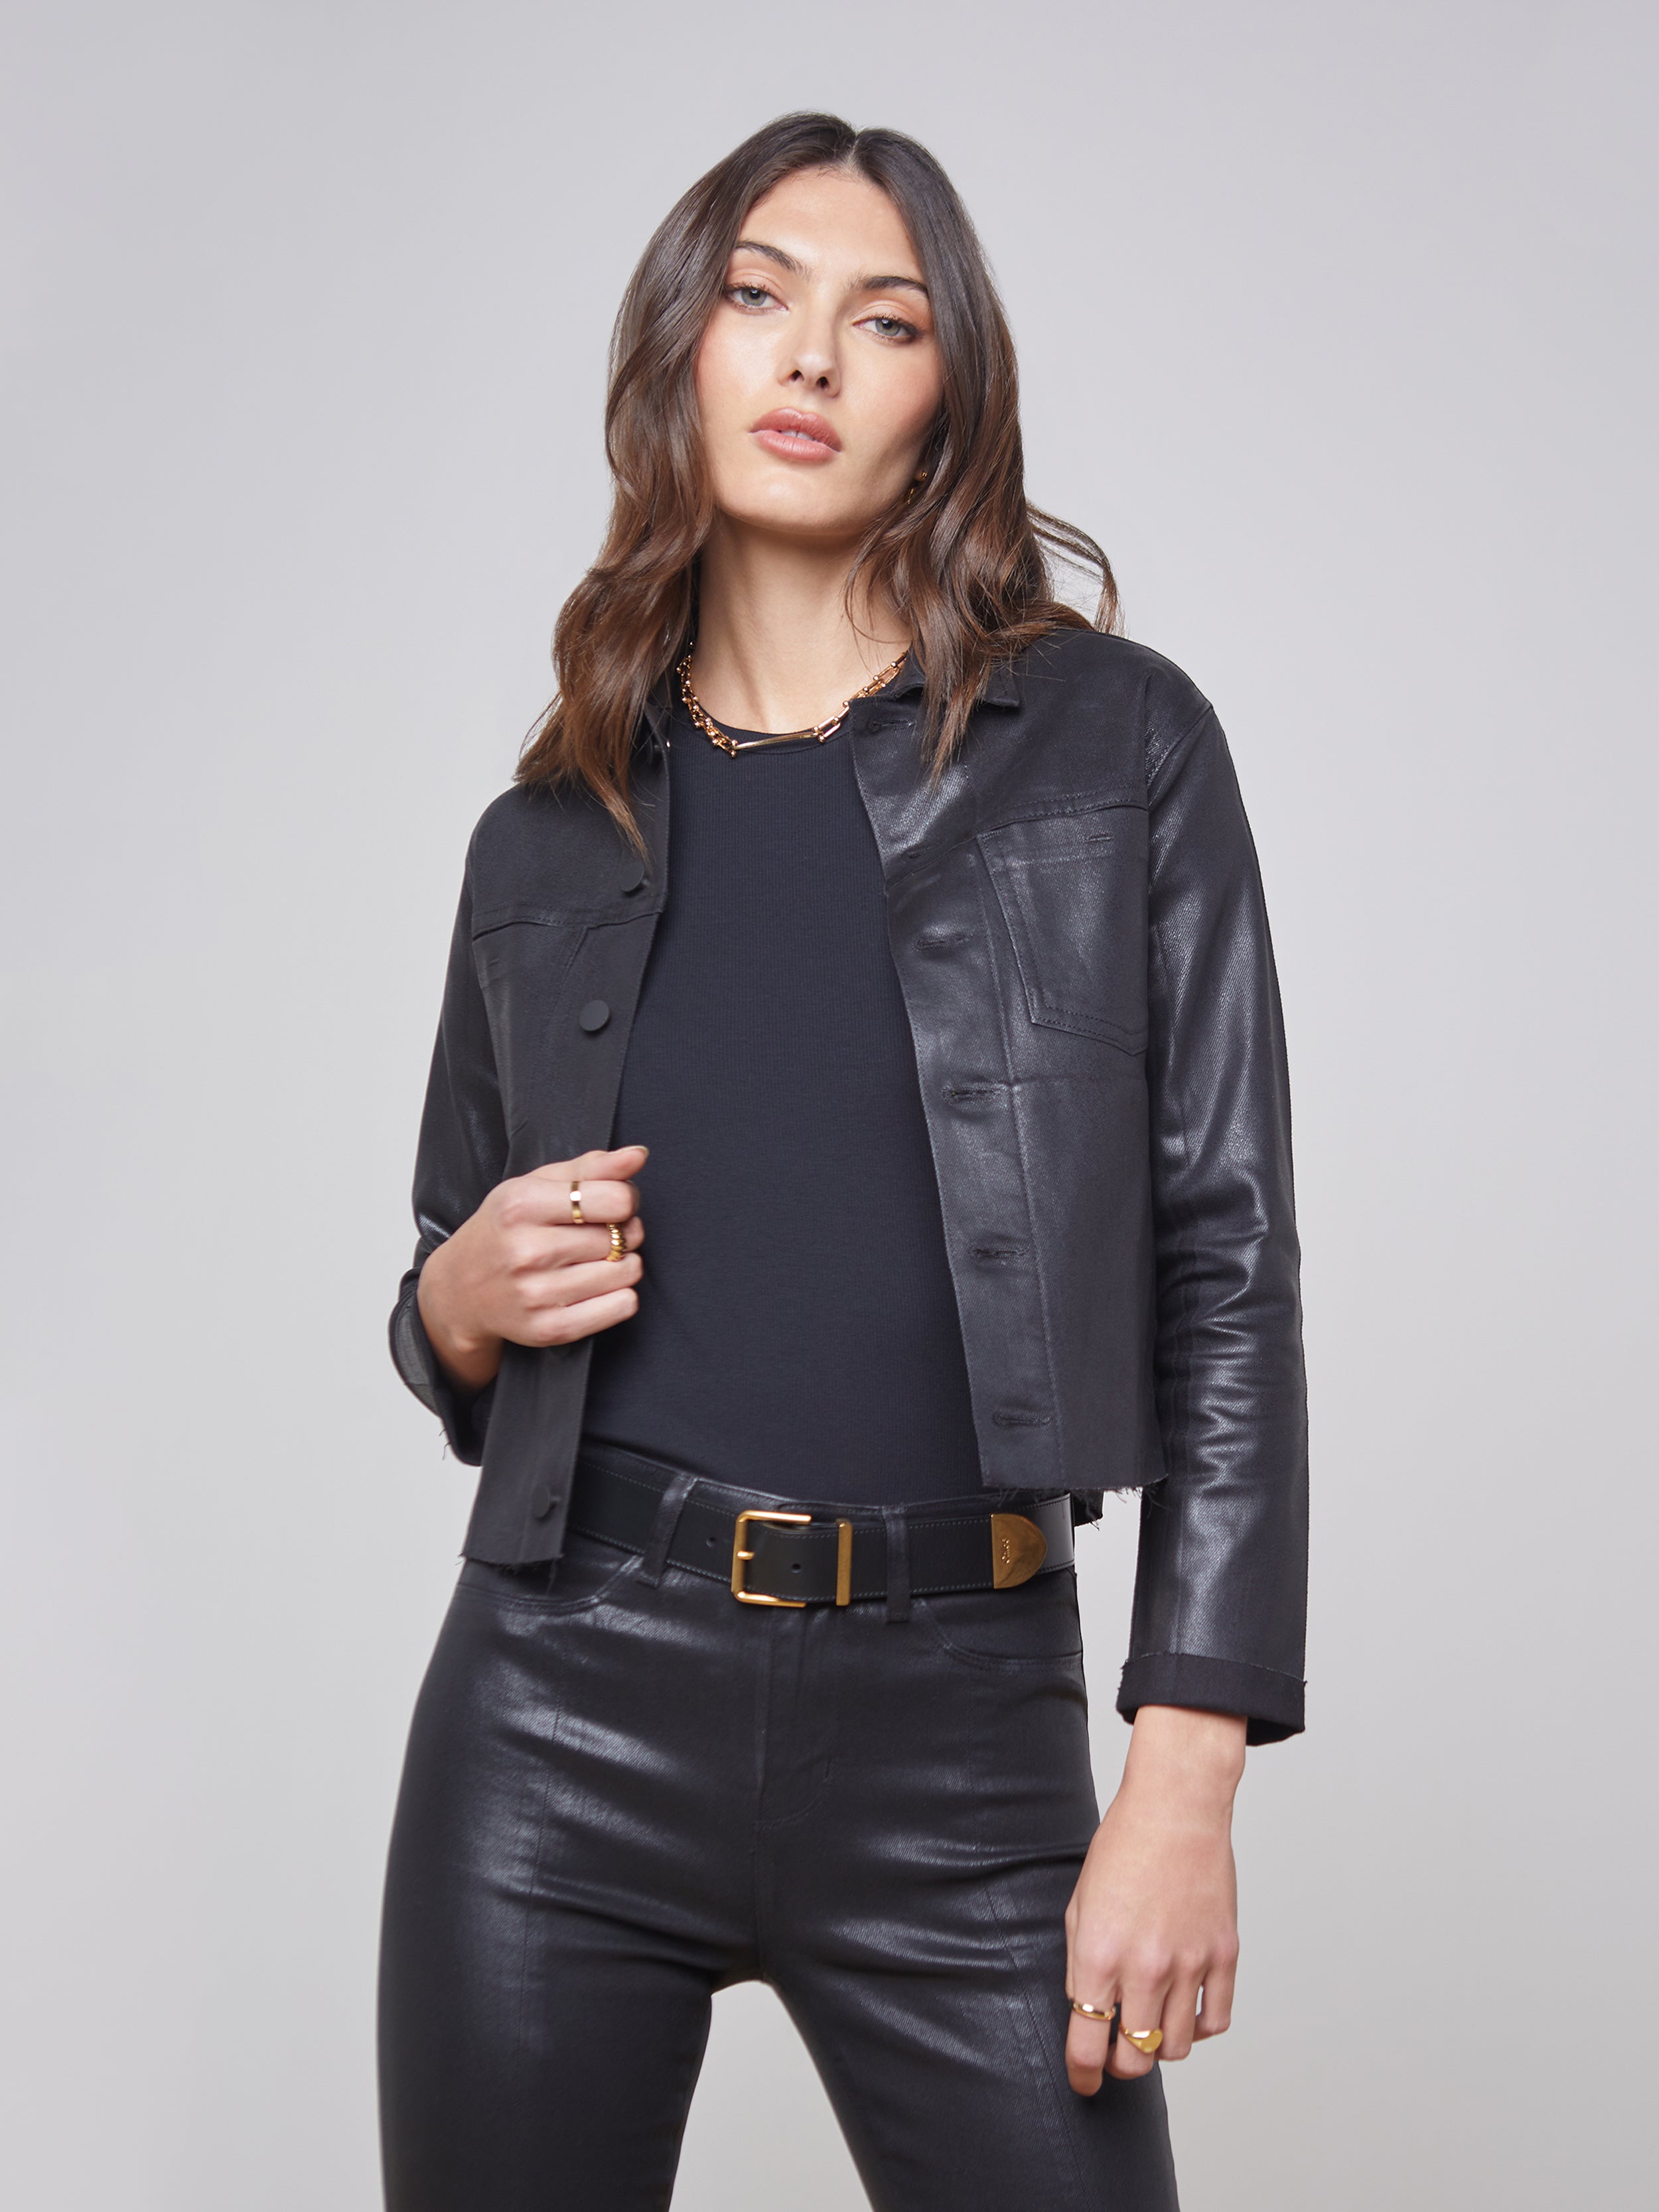 Levi's Women's Faux-Leather Short Puffer Jacket - Black - Size Xs